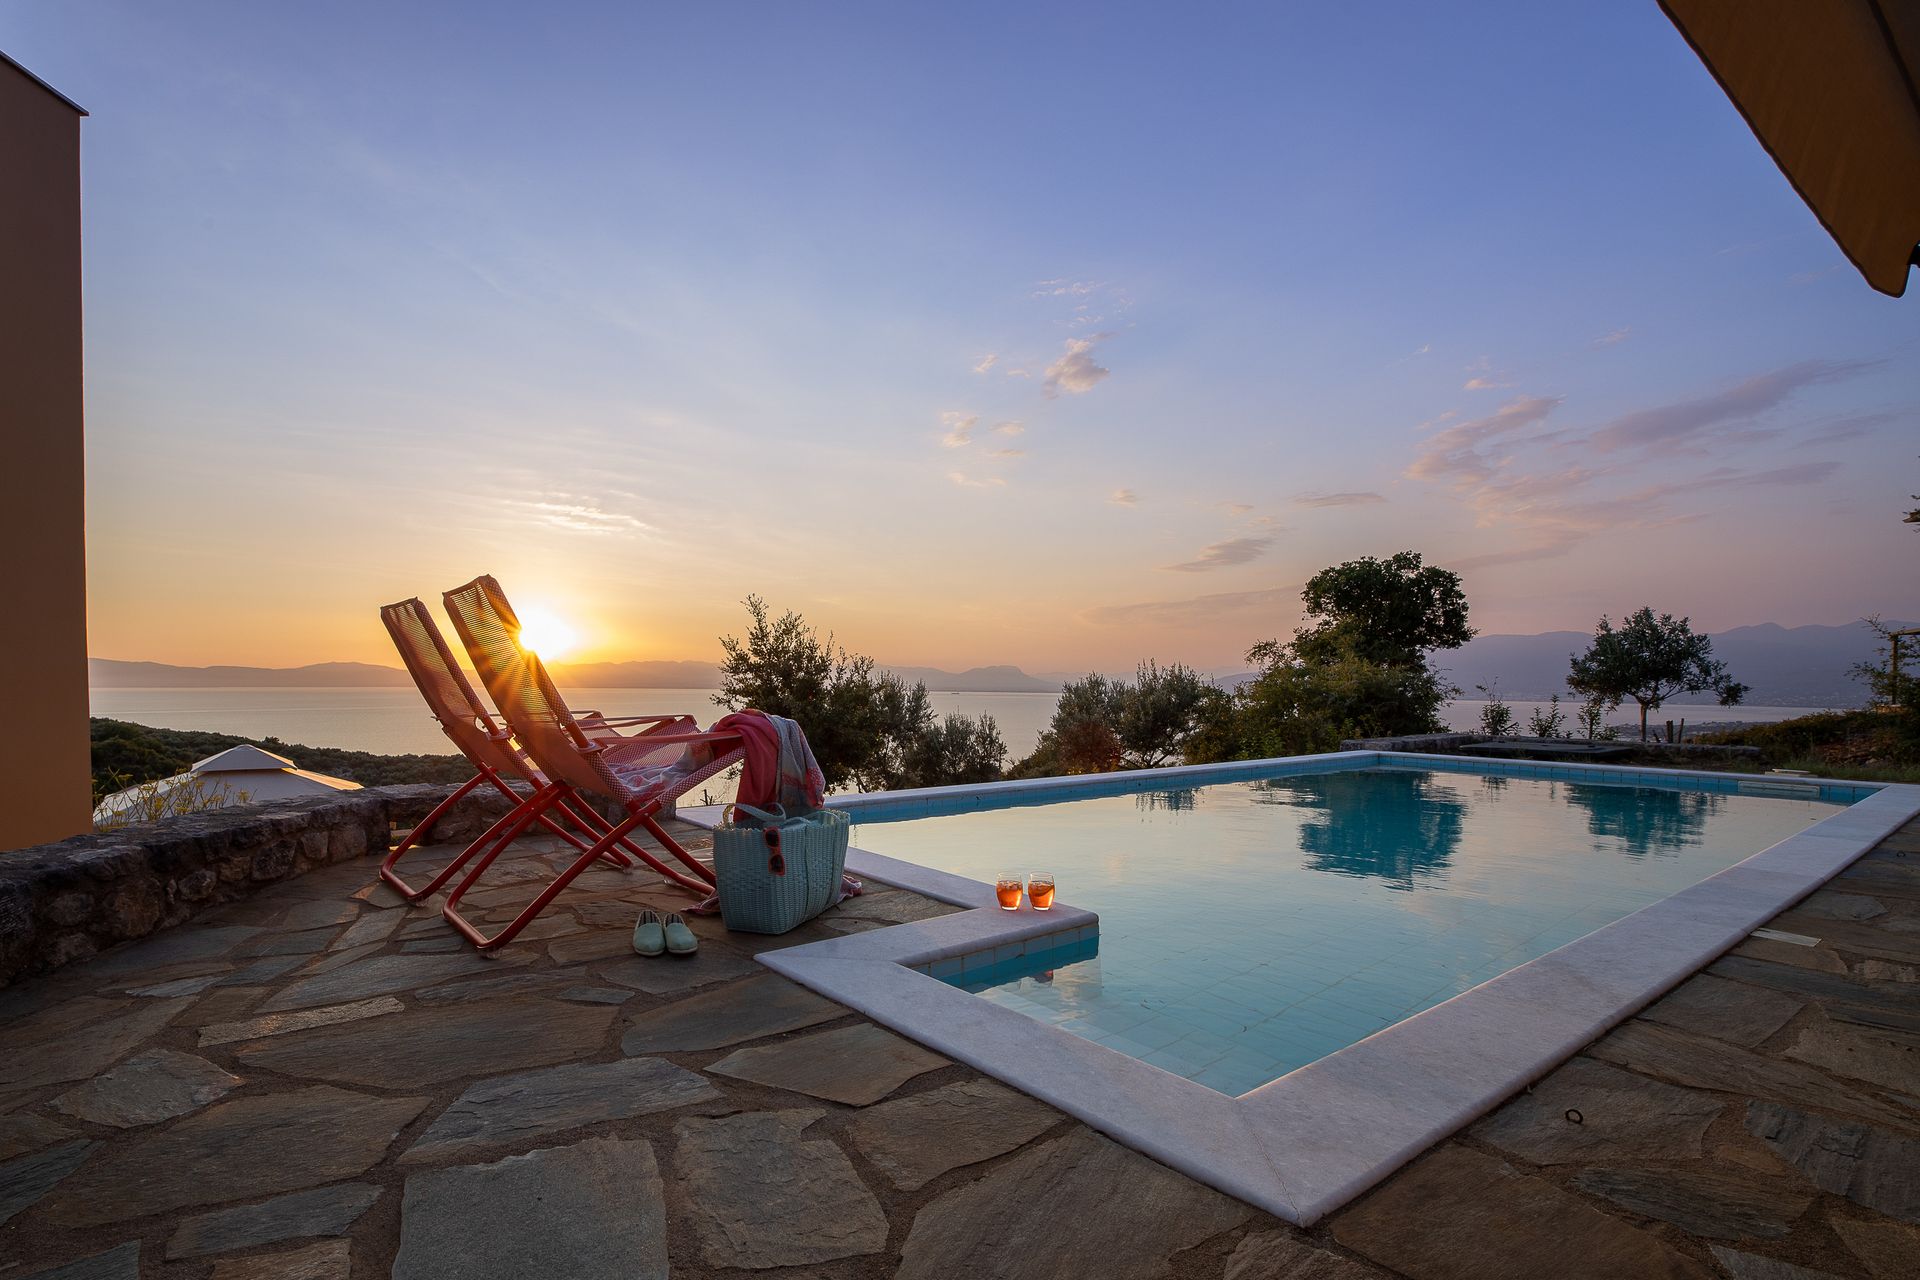 Searocks Exclusive Villas Resort - Κιτριές, Μεσσηνία ✦ 2 Ημέρες (1 Διανυκτέρευση) ✦ 6 άτομα ✦ 2 ✦ έως 25/09/2022 ✦ Early Check-In & Late Check-Out κατόπιν διαθεσιμότητας!